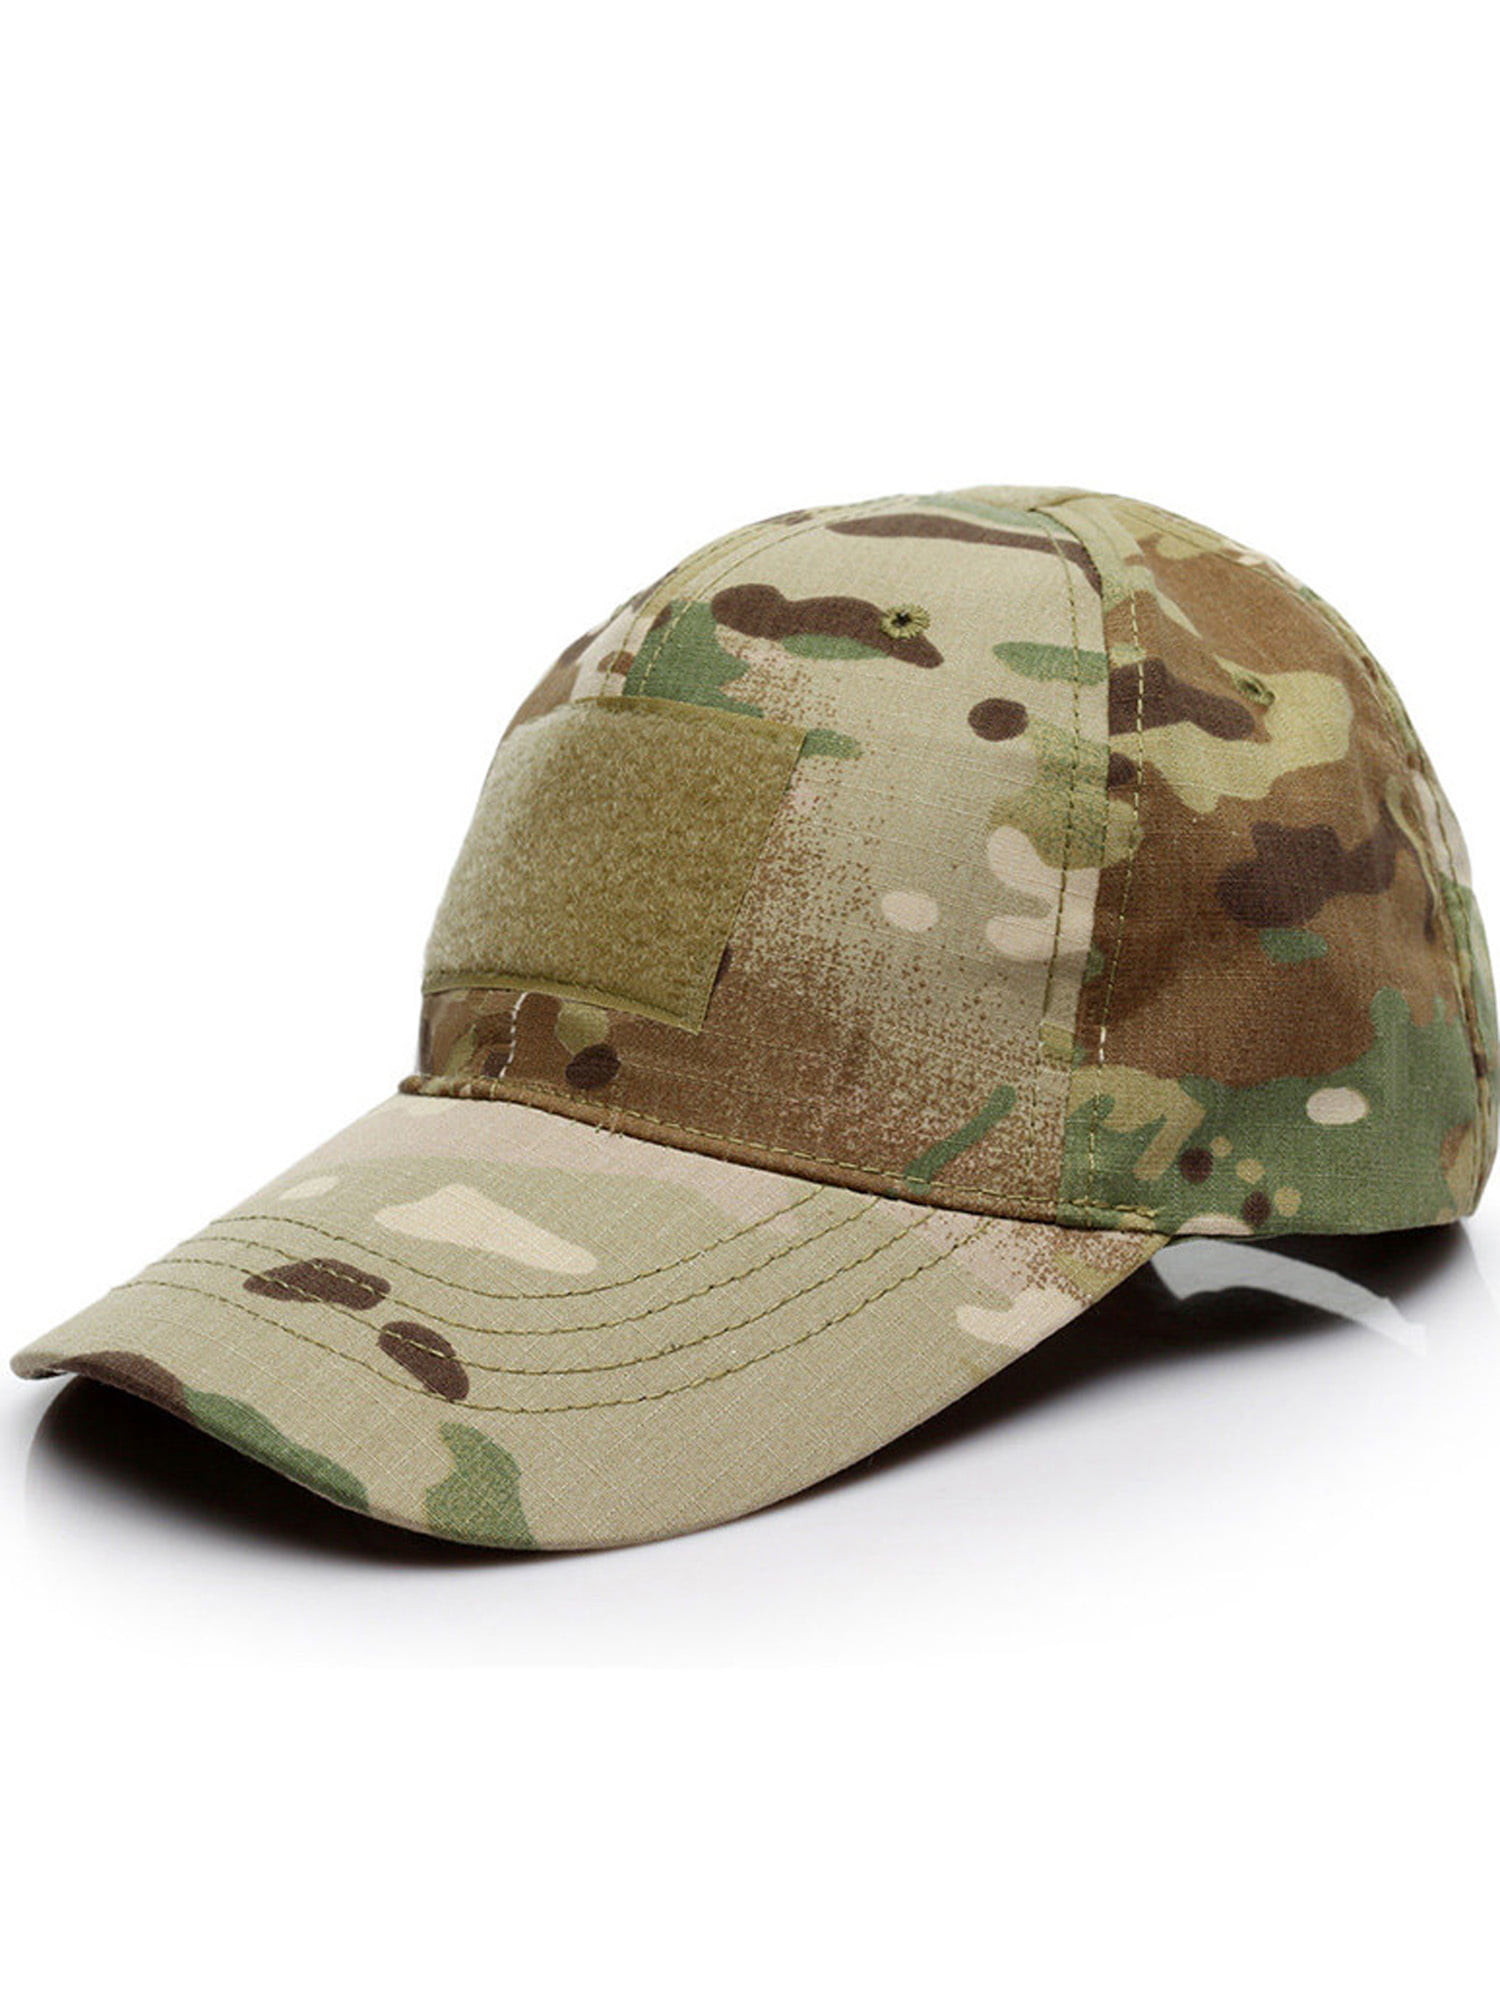 Field Sports Online Desert Digital Camo Baseball Cap Operators Hat Airsoft Army Military Camouflage Cap 